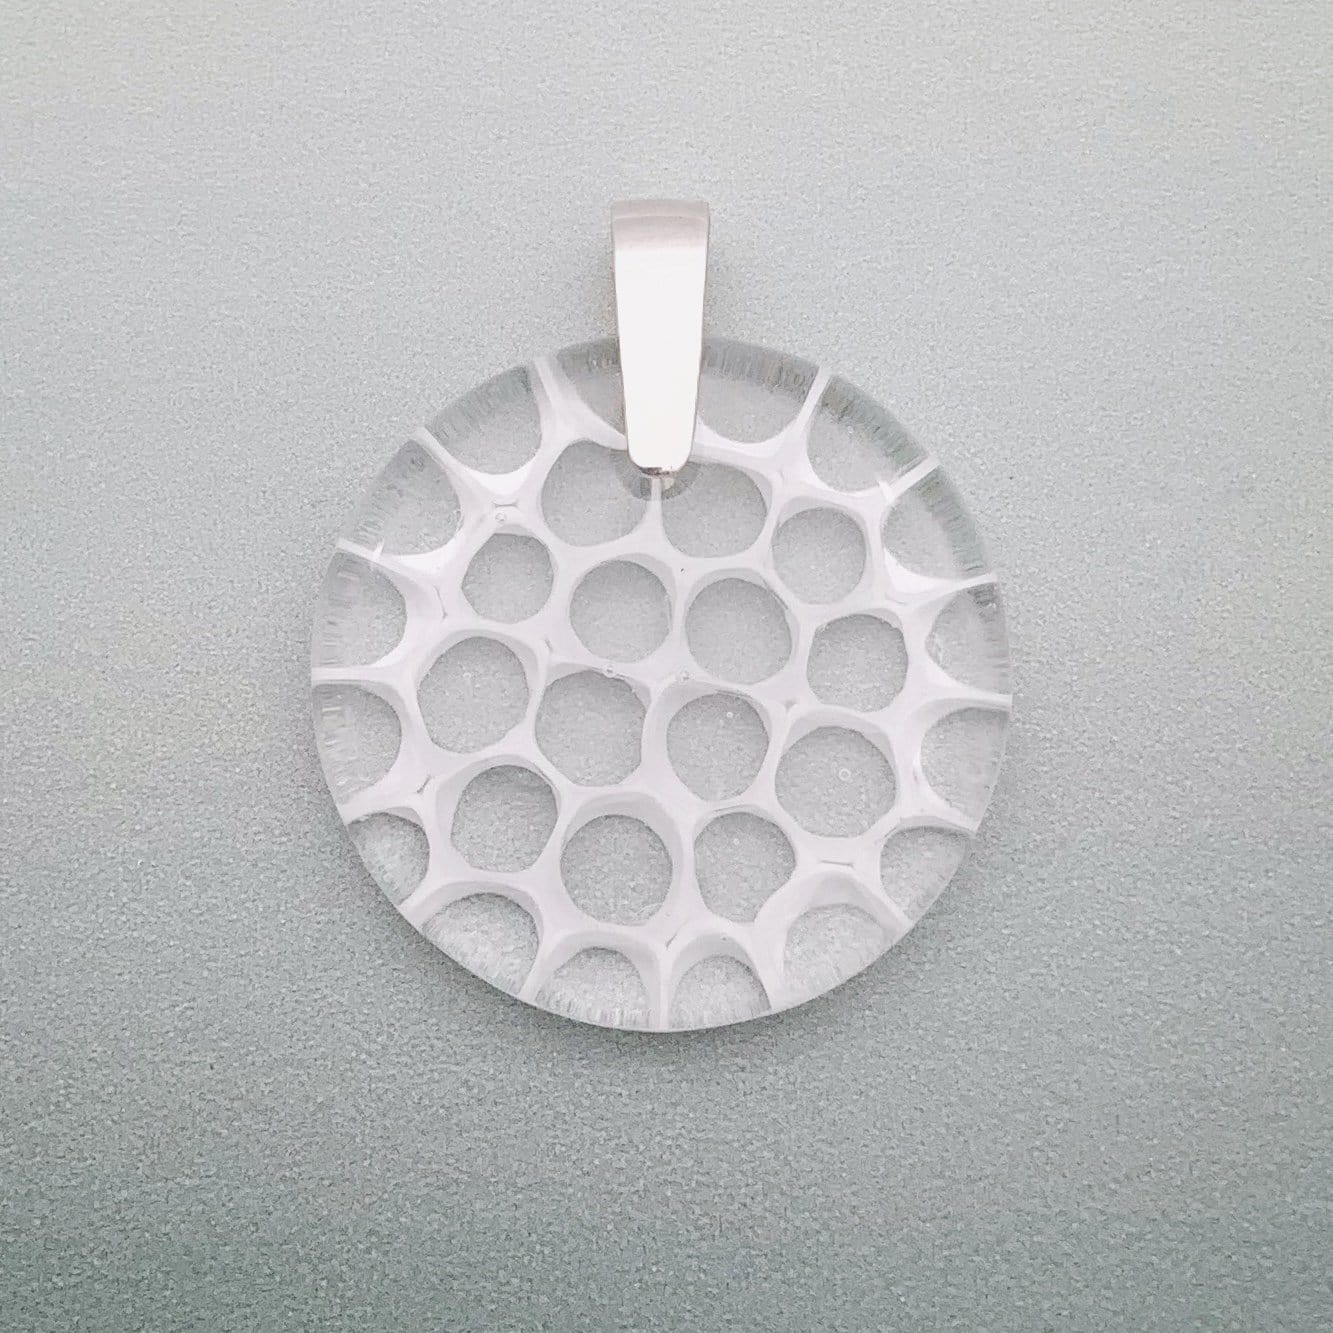 Fused murrini glass 35mm pendant in white & transparent cells